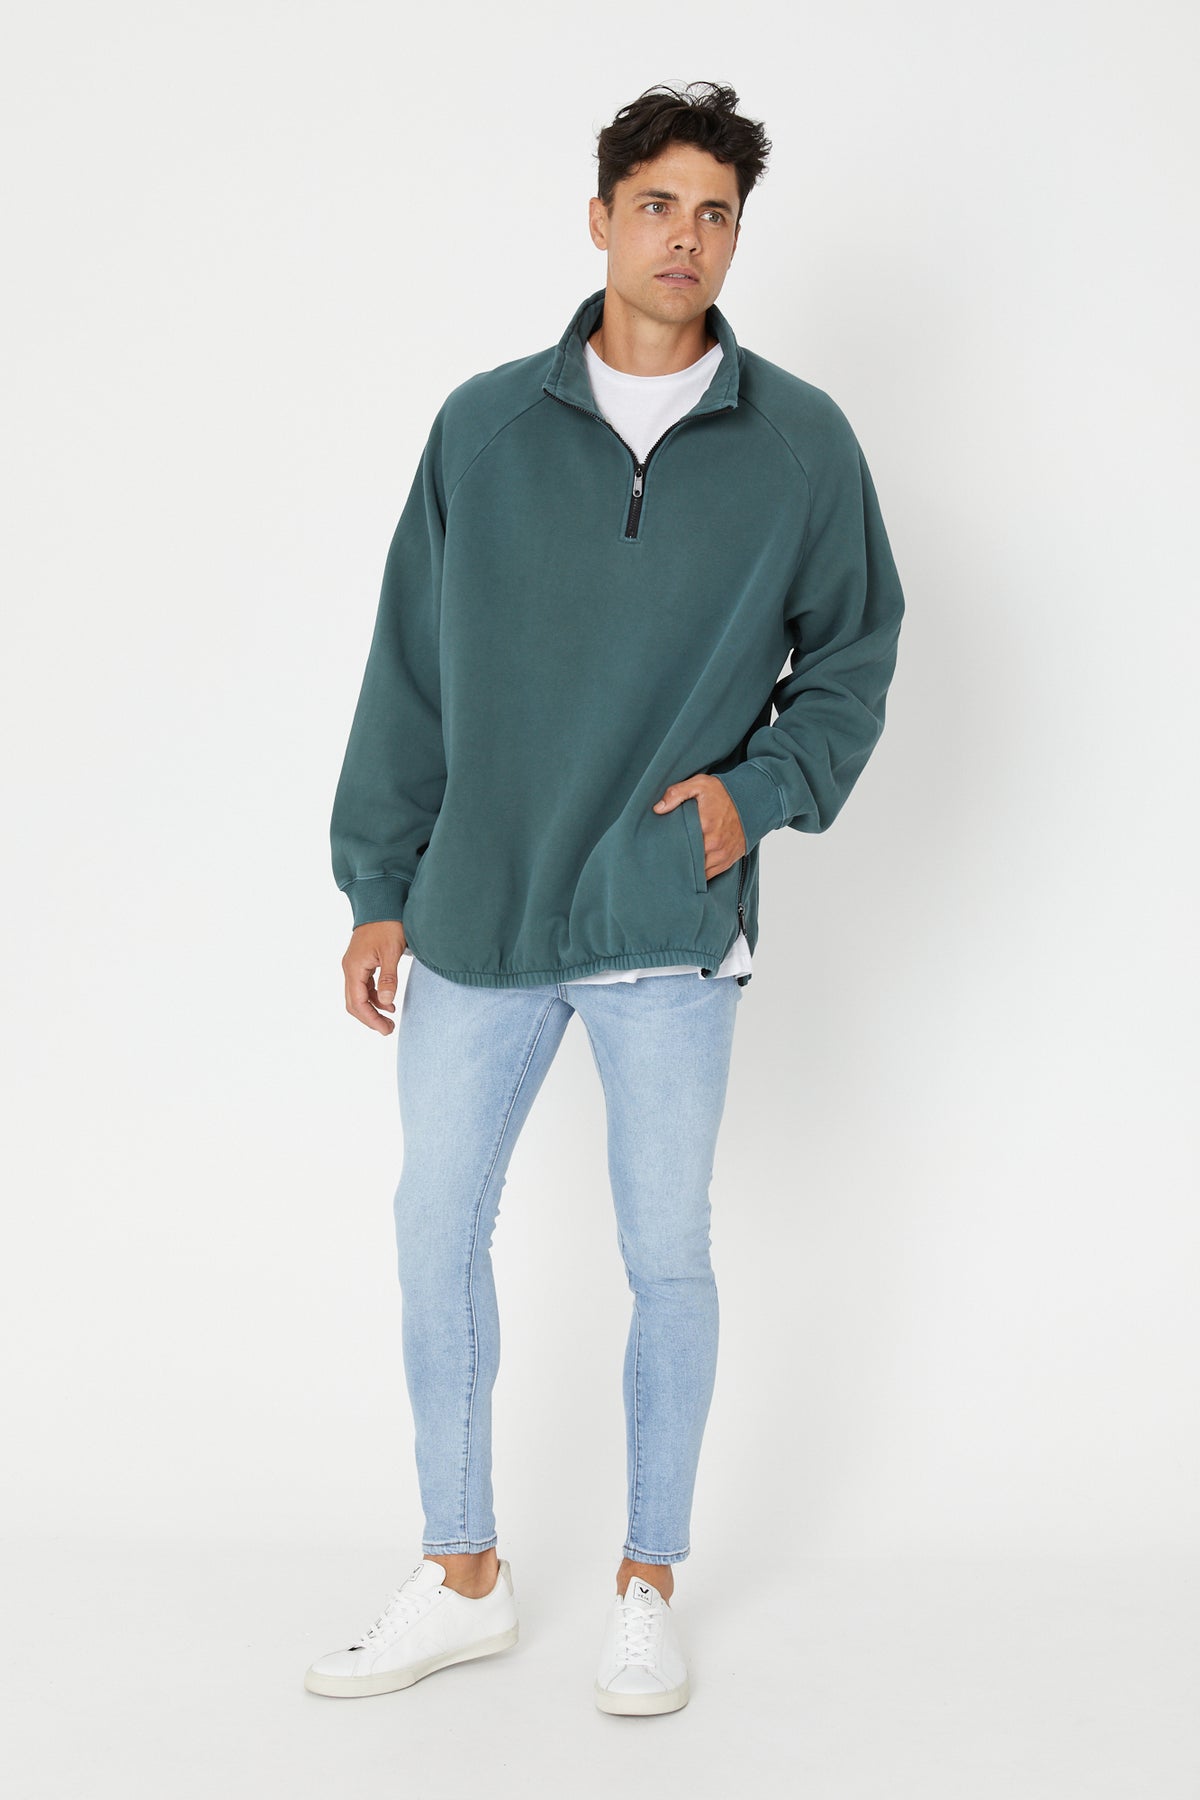 Frank Fleece Quarter Sweater Emerald